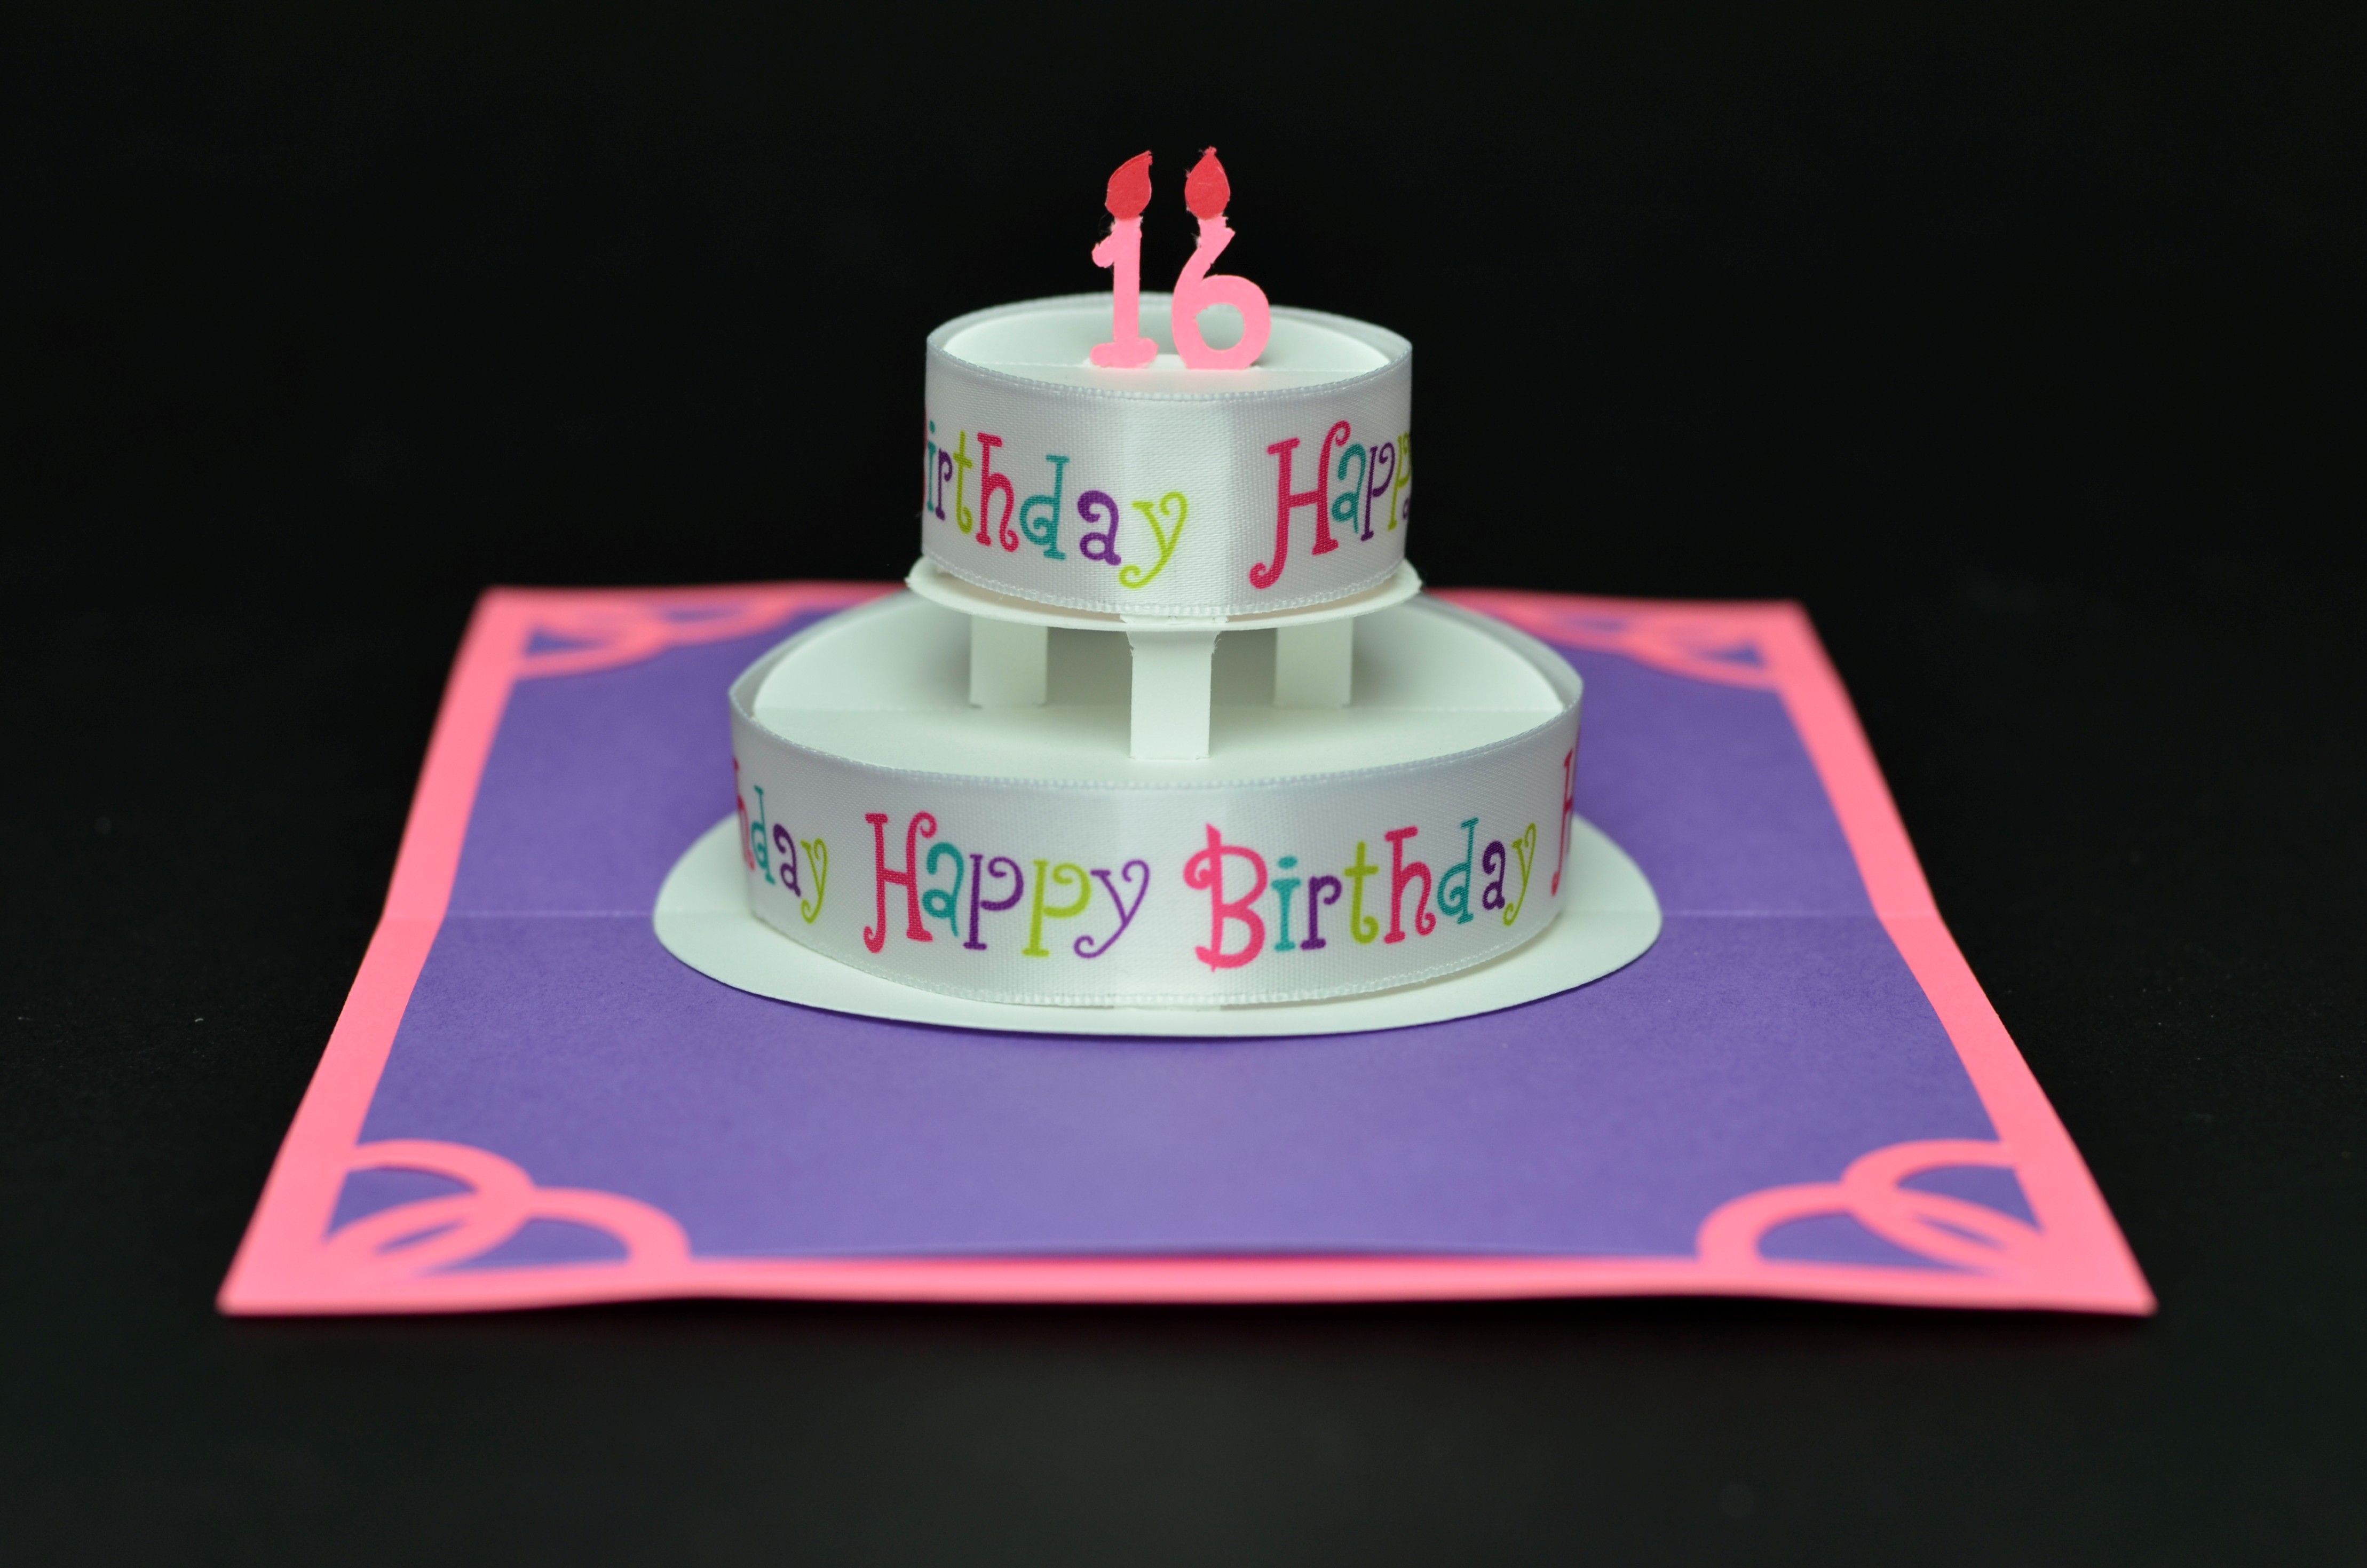 Round Birthday Cake Pop Up Card With "Happy Birthday" Ribbon - Creative Pop Up Cards